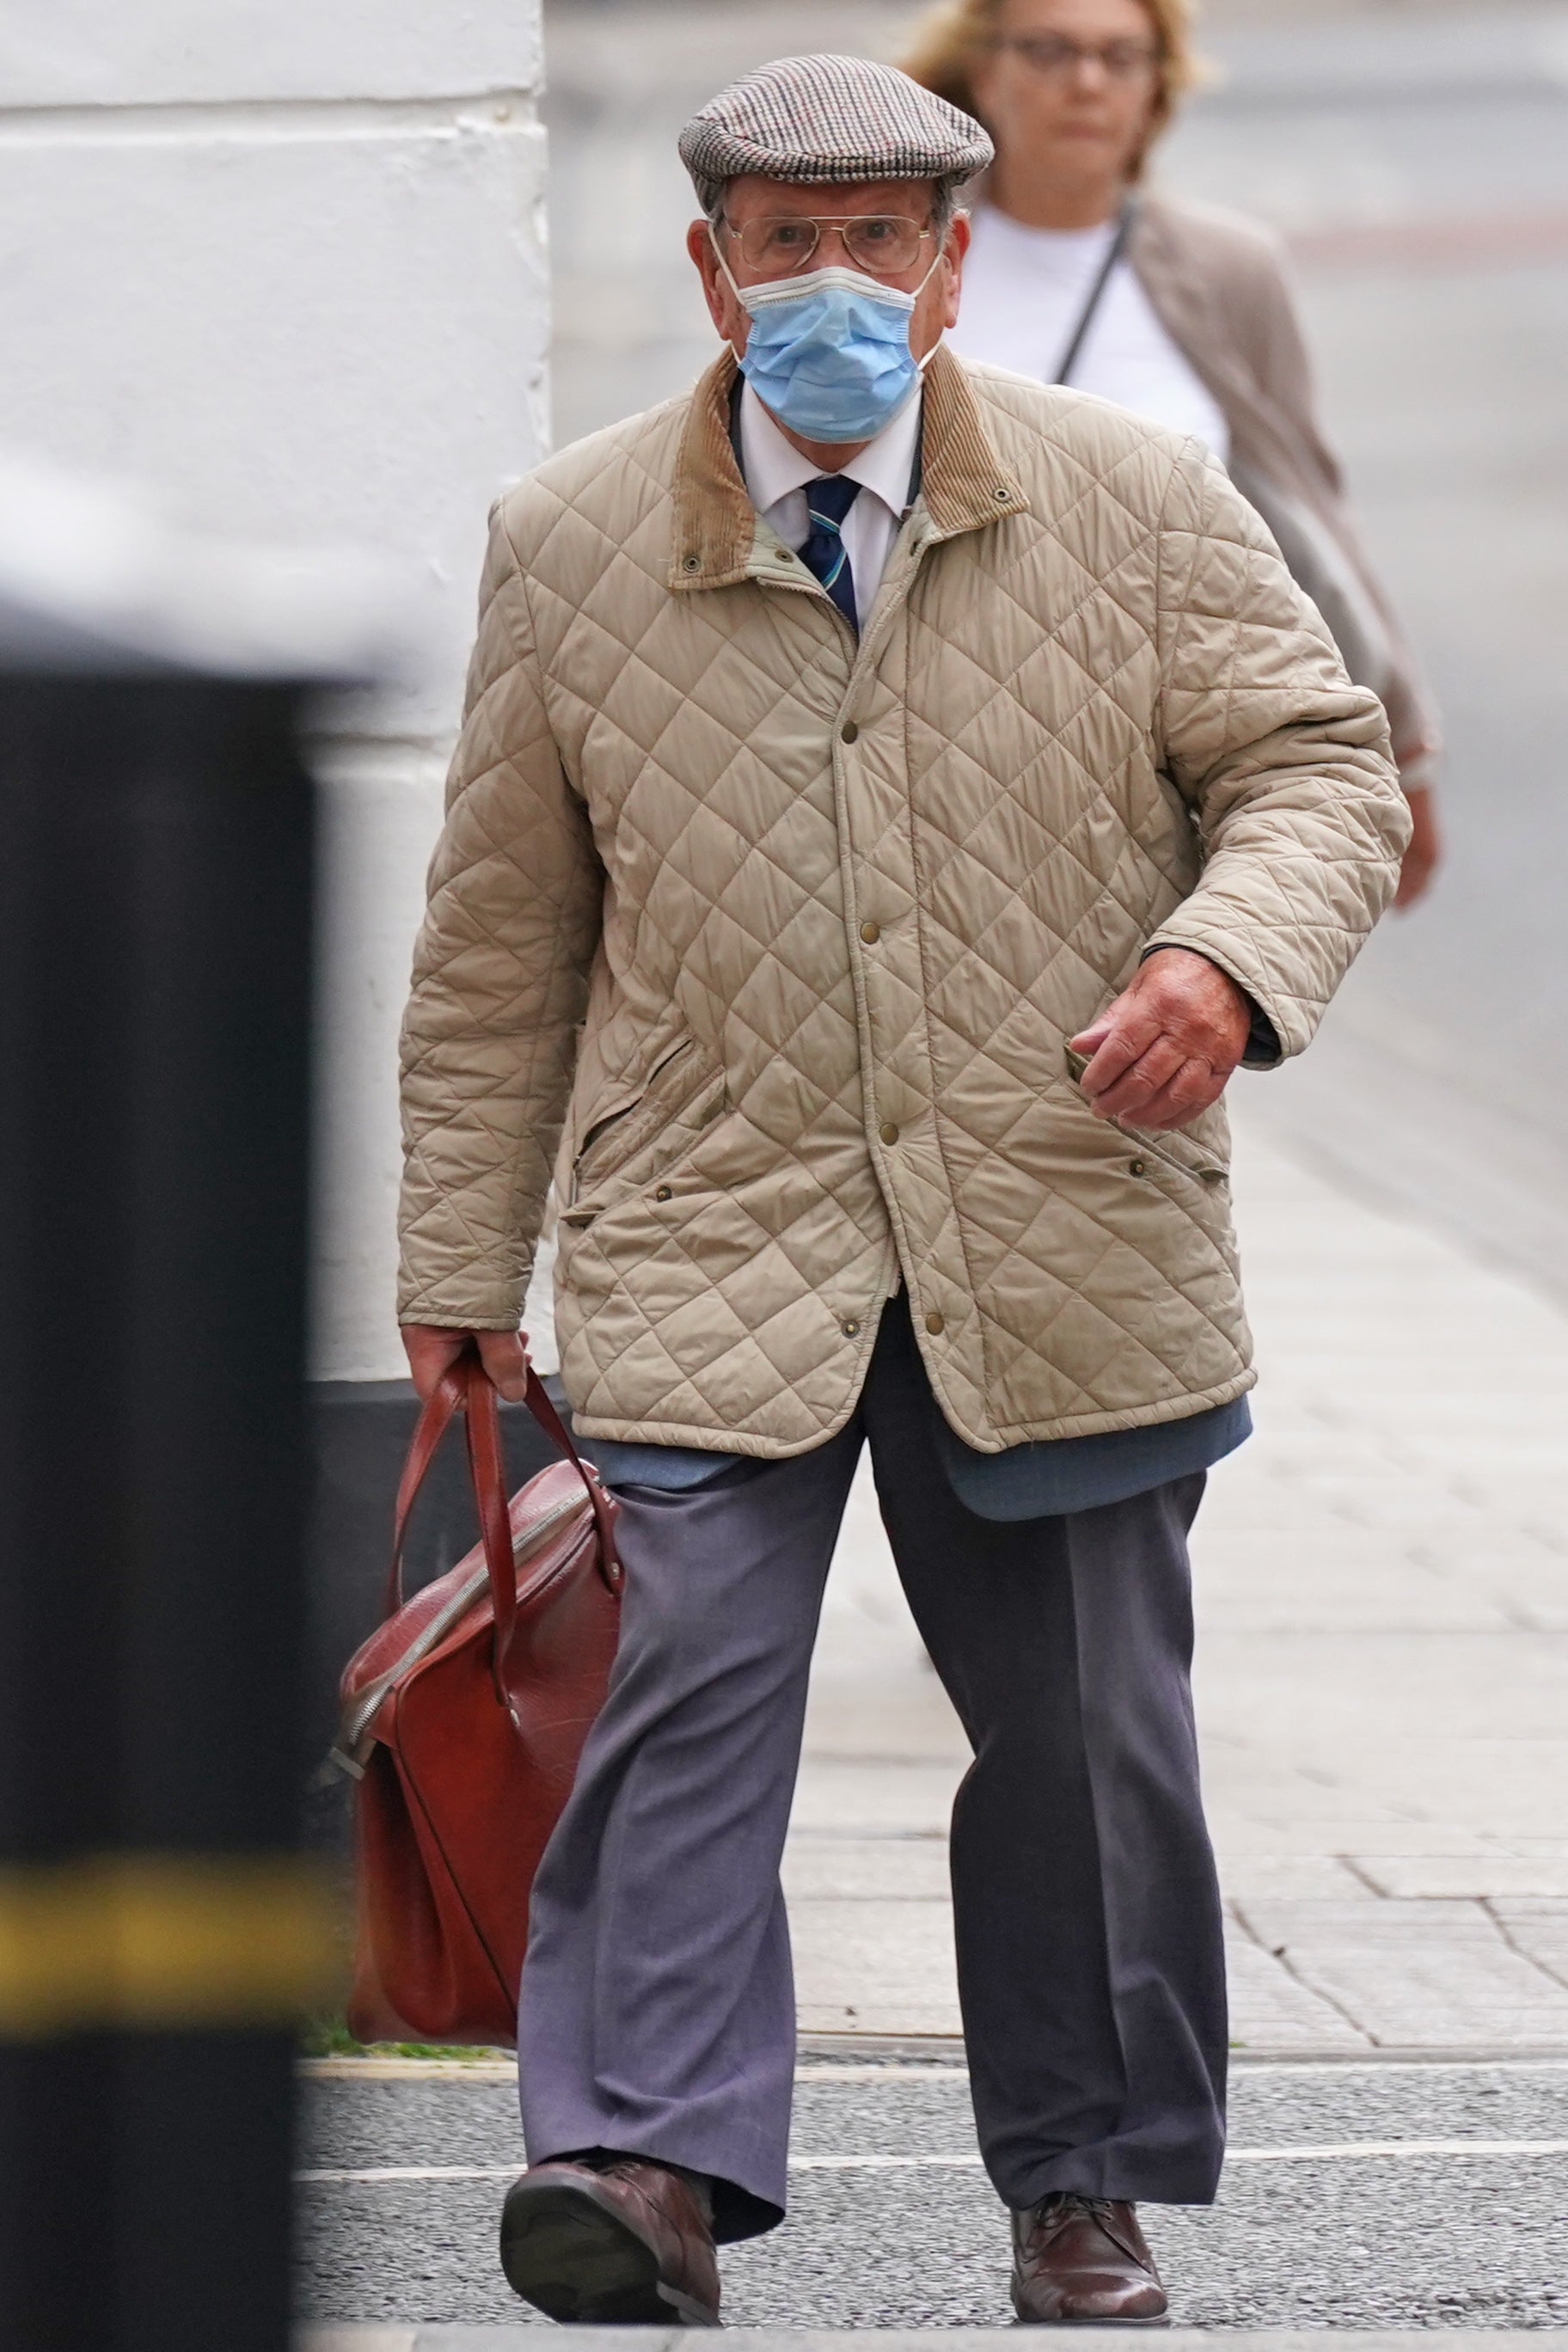 David Venables, 89, arrives at Worcester Crown Court. (Jacob King/PA)